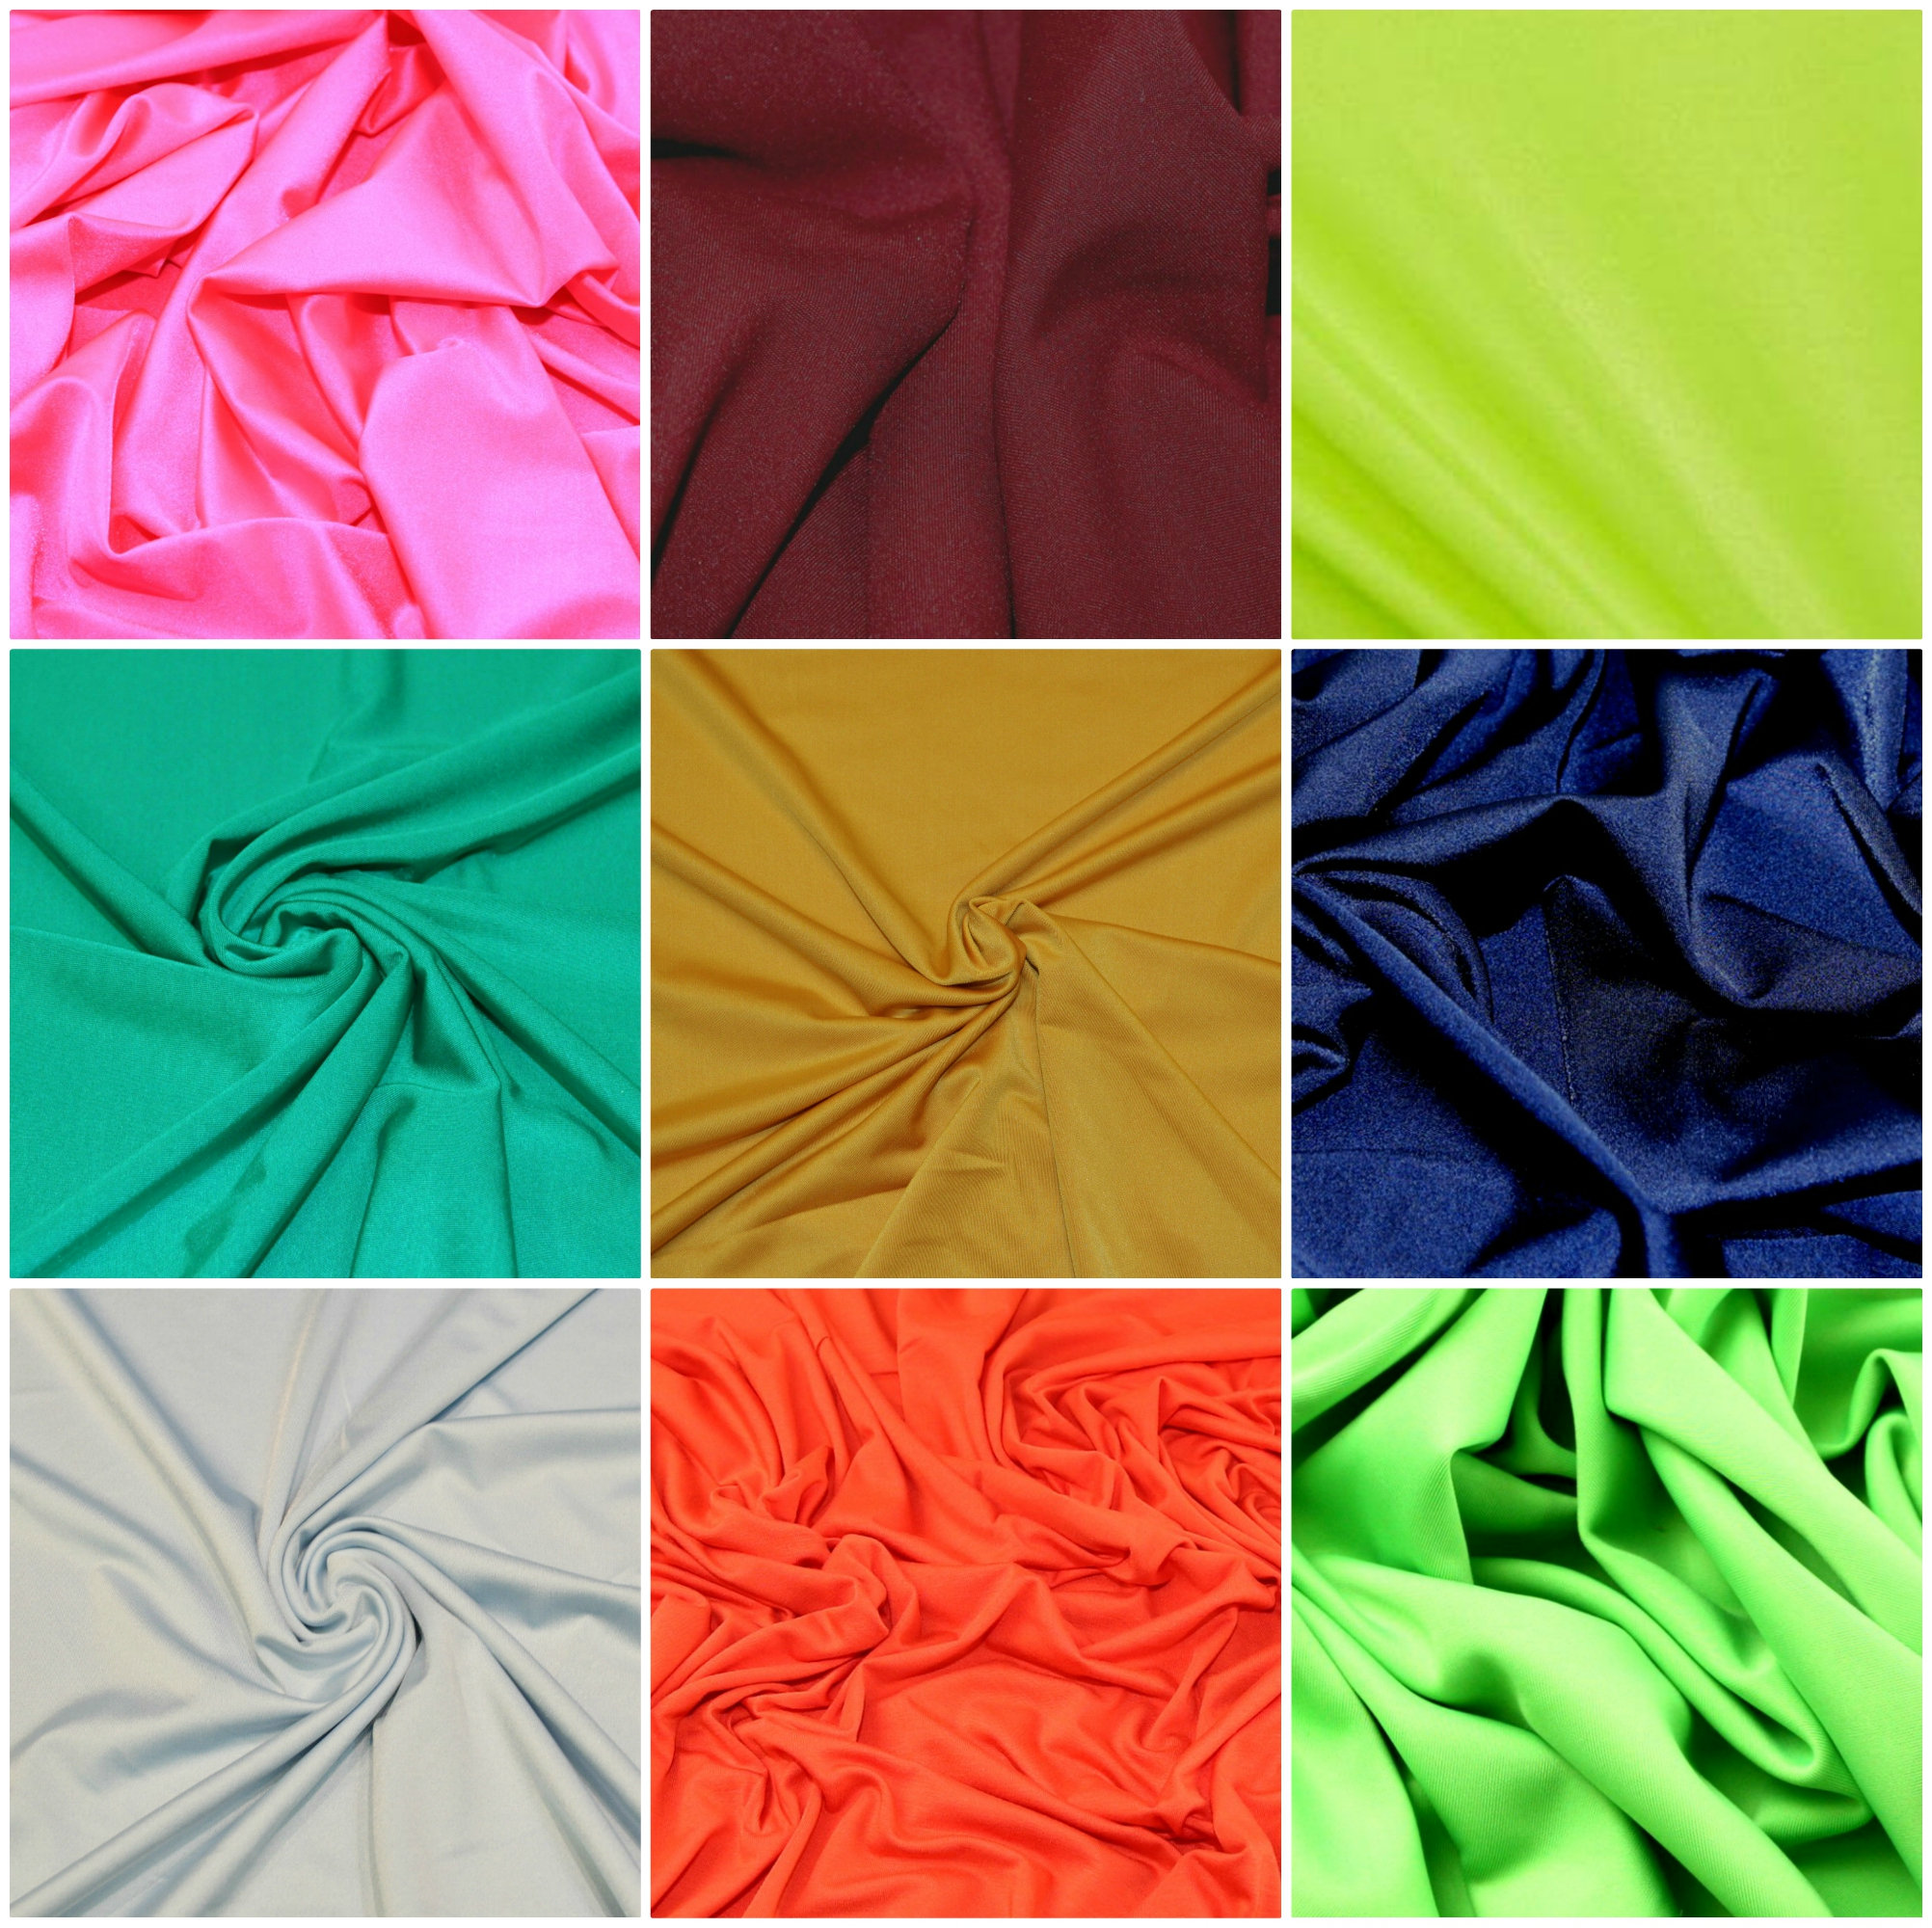 CORDURA® Nylon 66 Lycra 4-way Durable Stretch Fabric